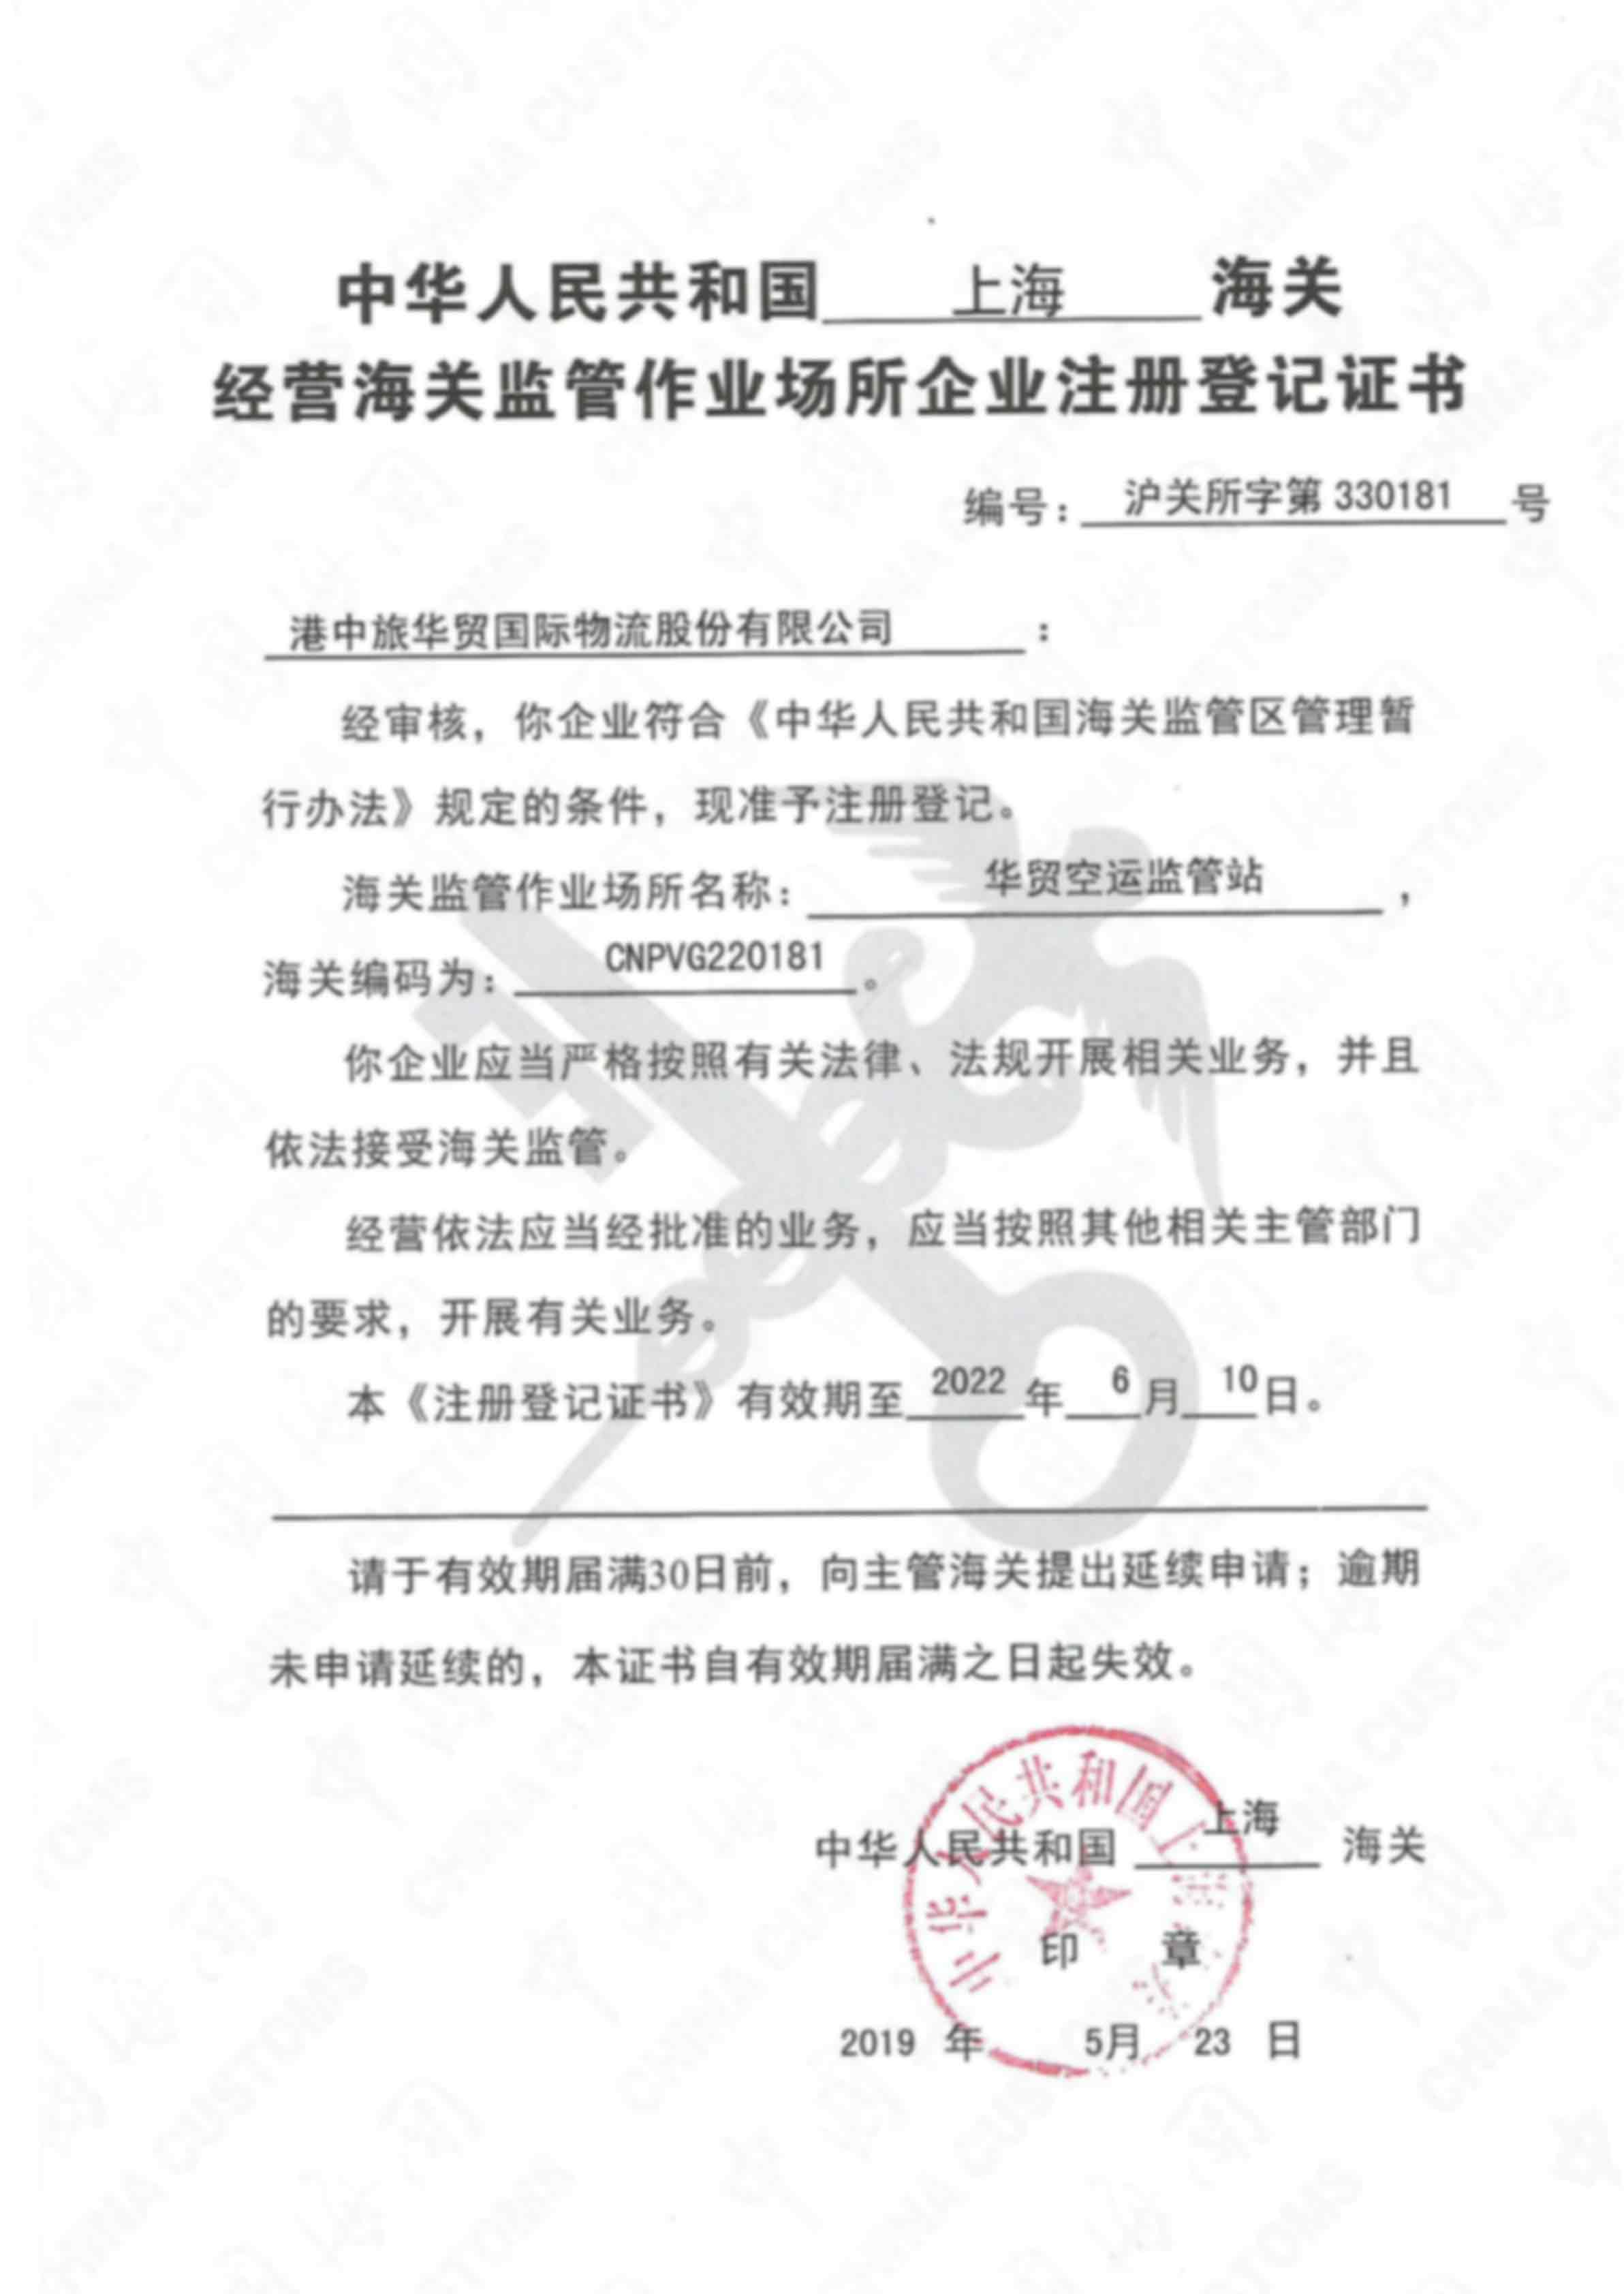 Registration certificate of enterprises in customs supervised workplaces